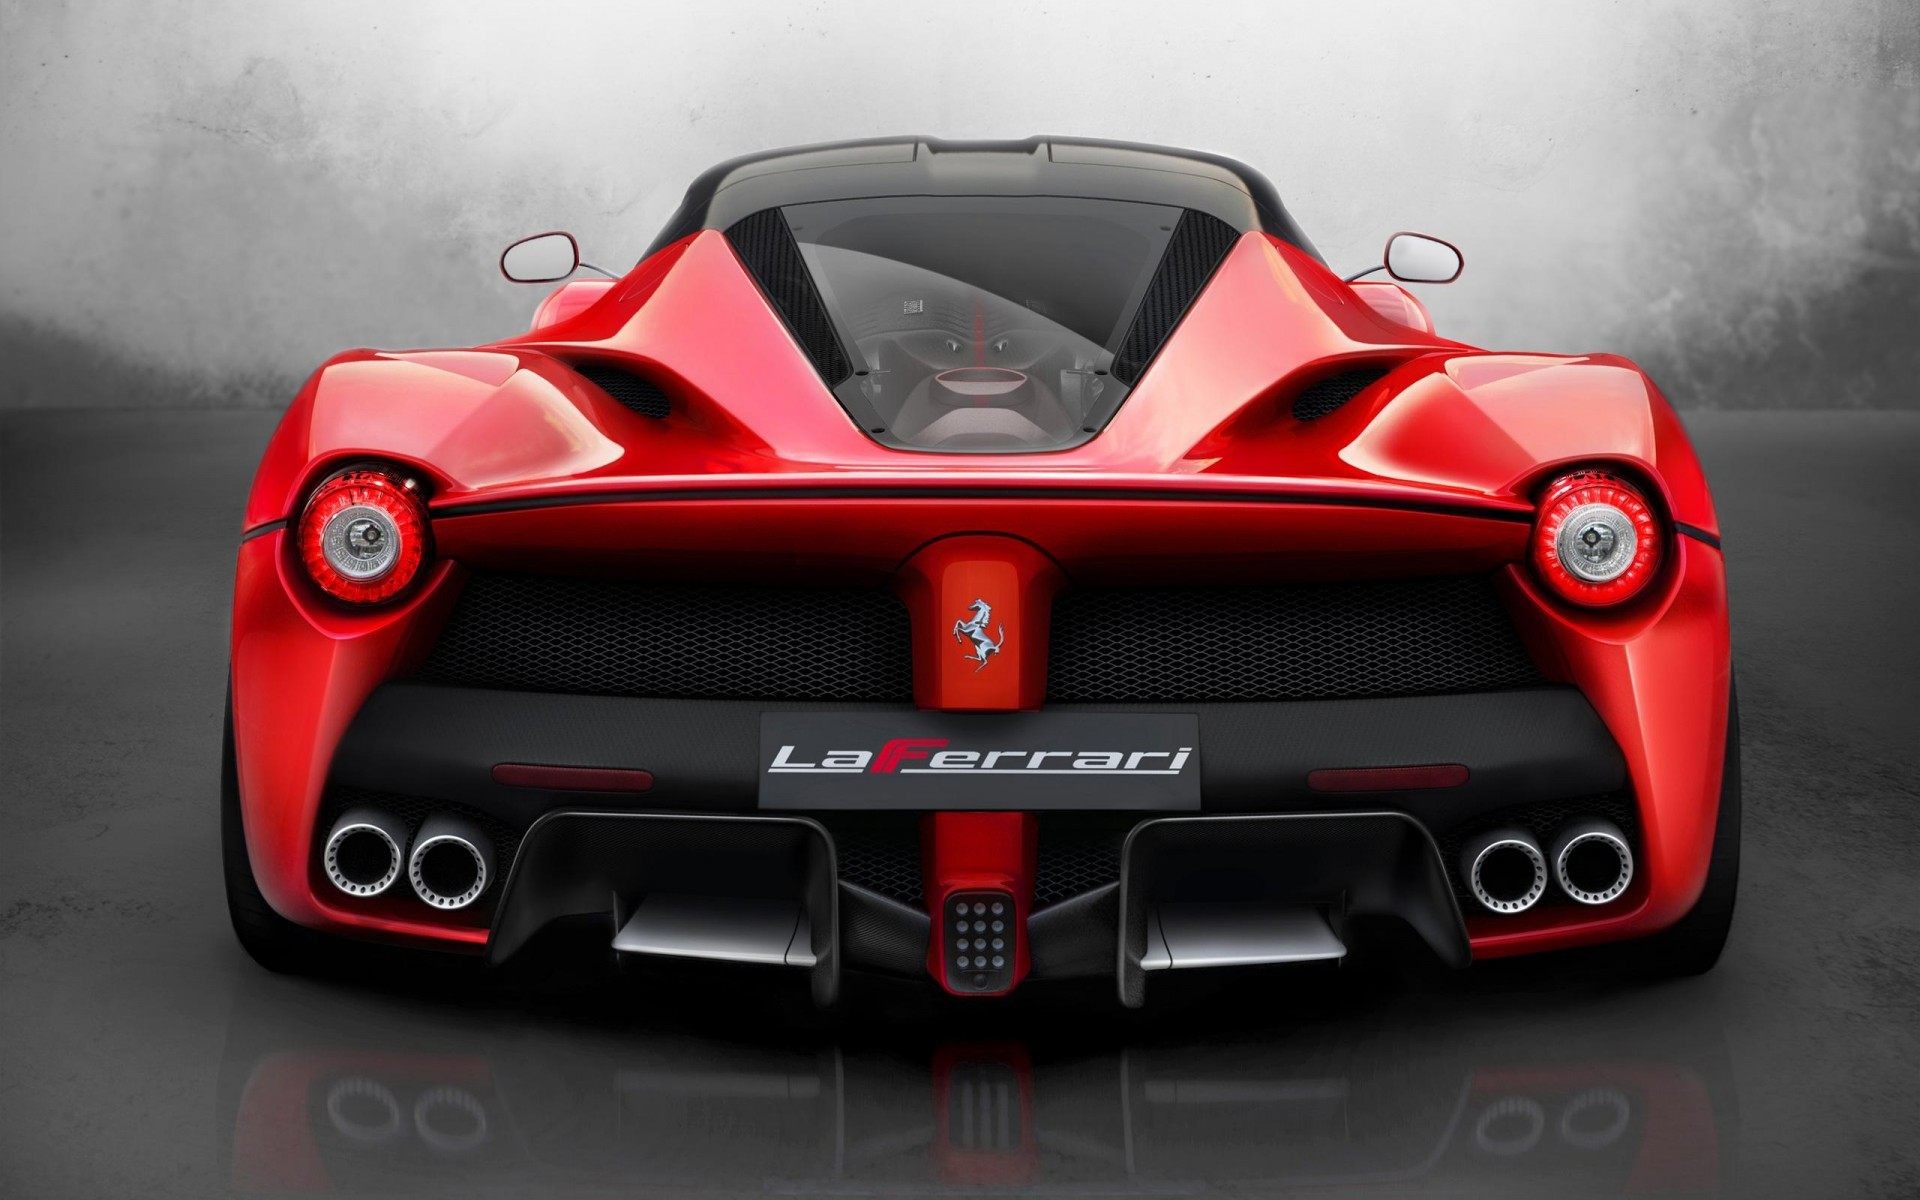 1920x1200 ... Ferrari Car Wallpaper With Nature For Desktop 3 Desktop La Ferrari Car  Hd For Mobile With ...